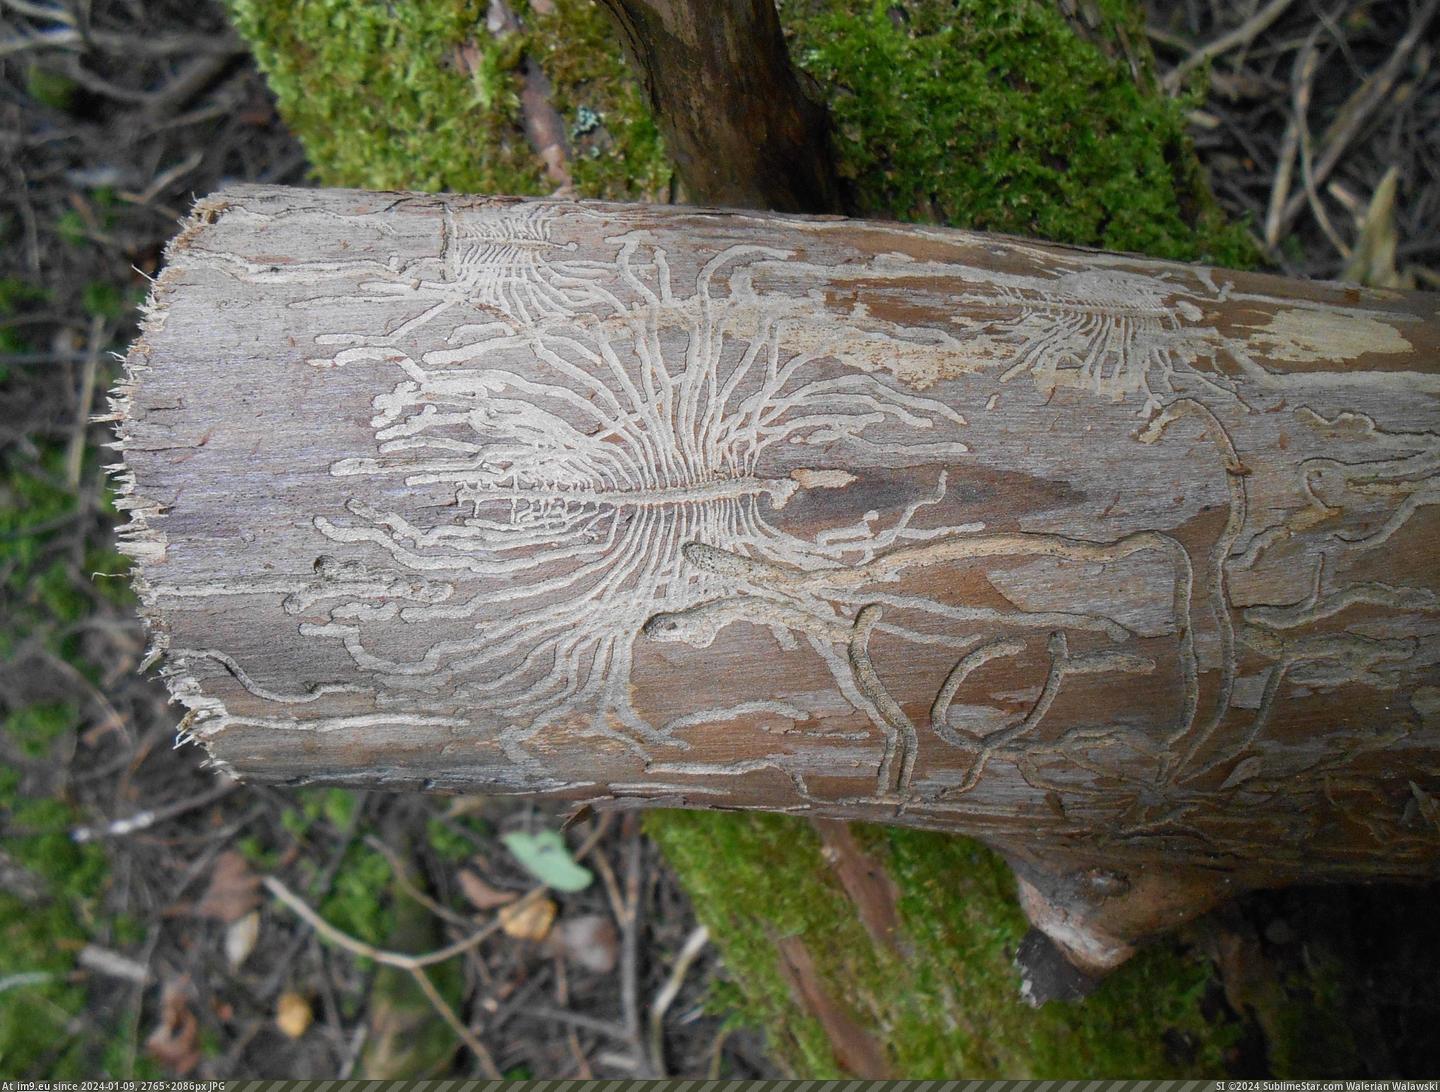 [Mildlyinteresting] Interesting pattern carved by worms on a log (in My r/MILDLYINTERESTING favs)